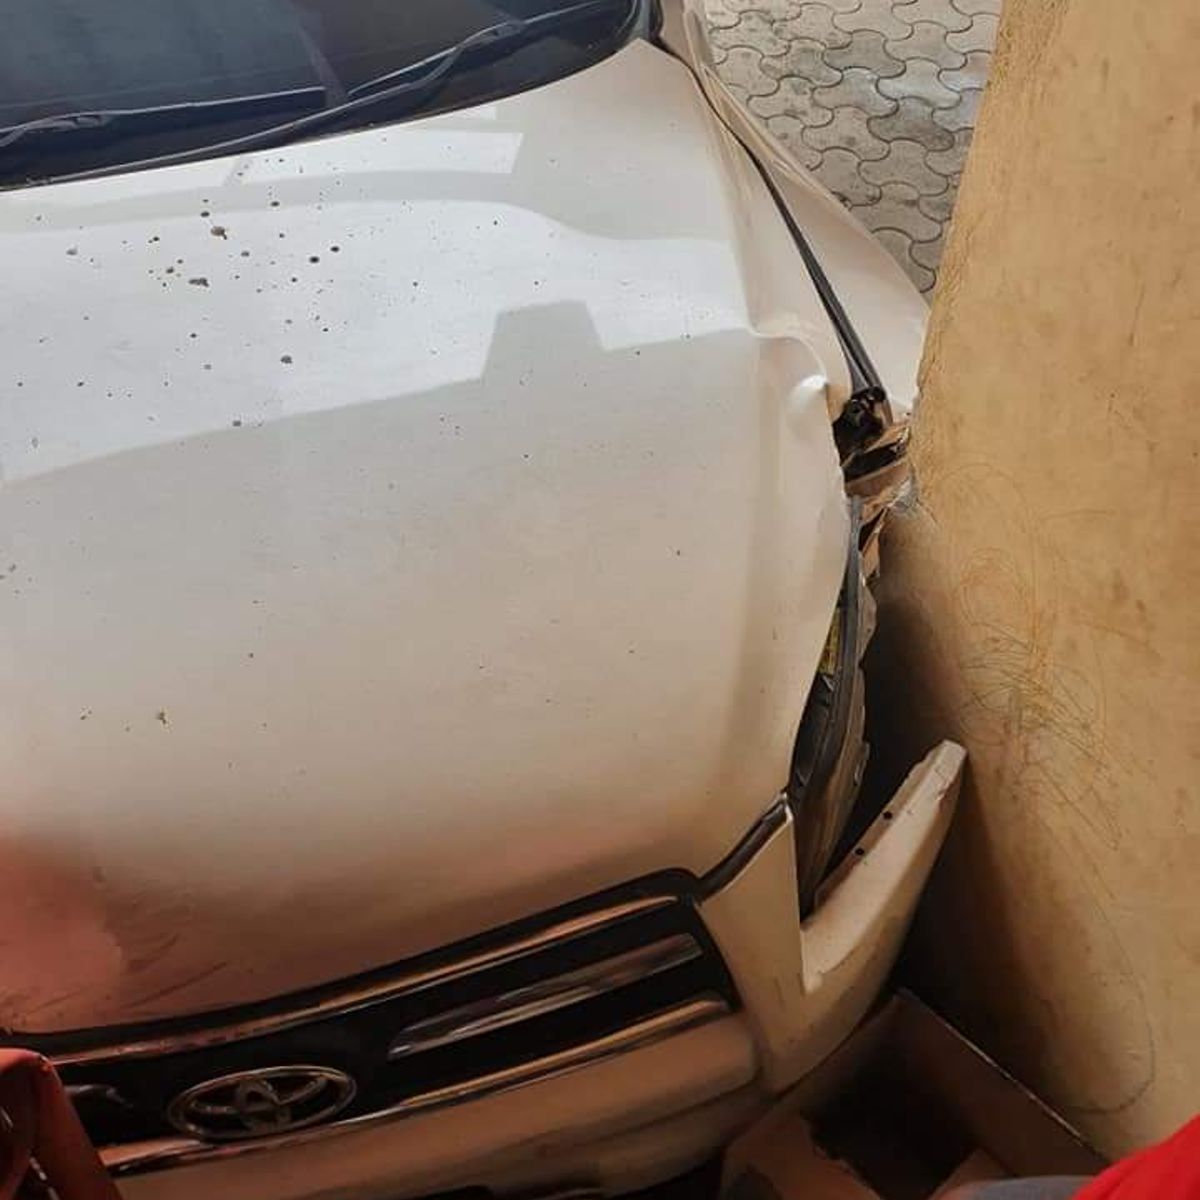 Kikuyu Benga Musician Samidoh Escapes Unhurt After Accident